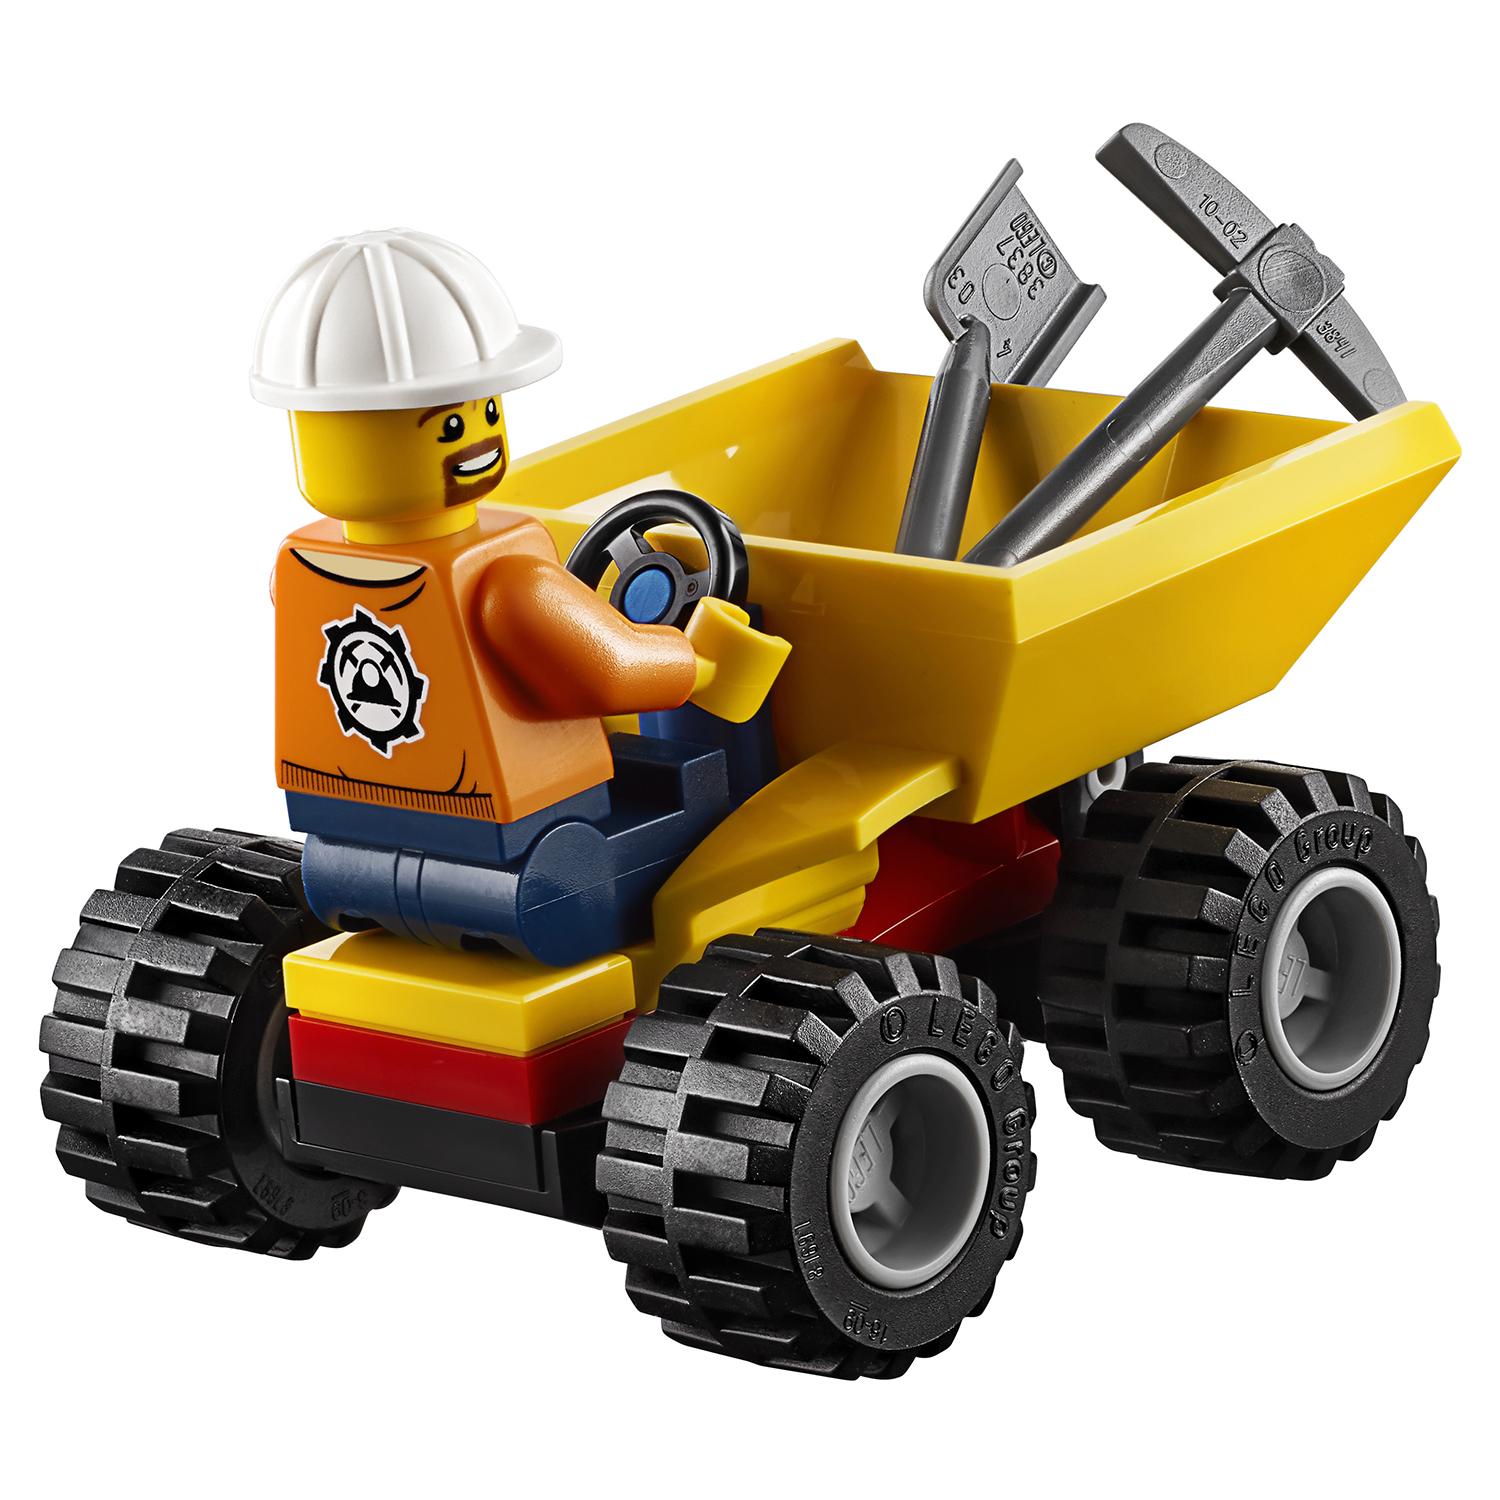 Lego City 60184 Бригада шахтеров